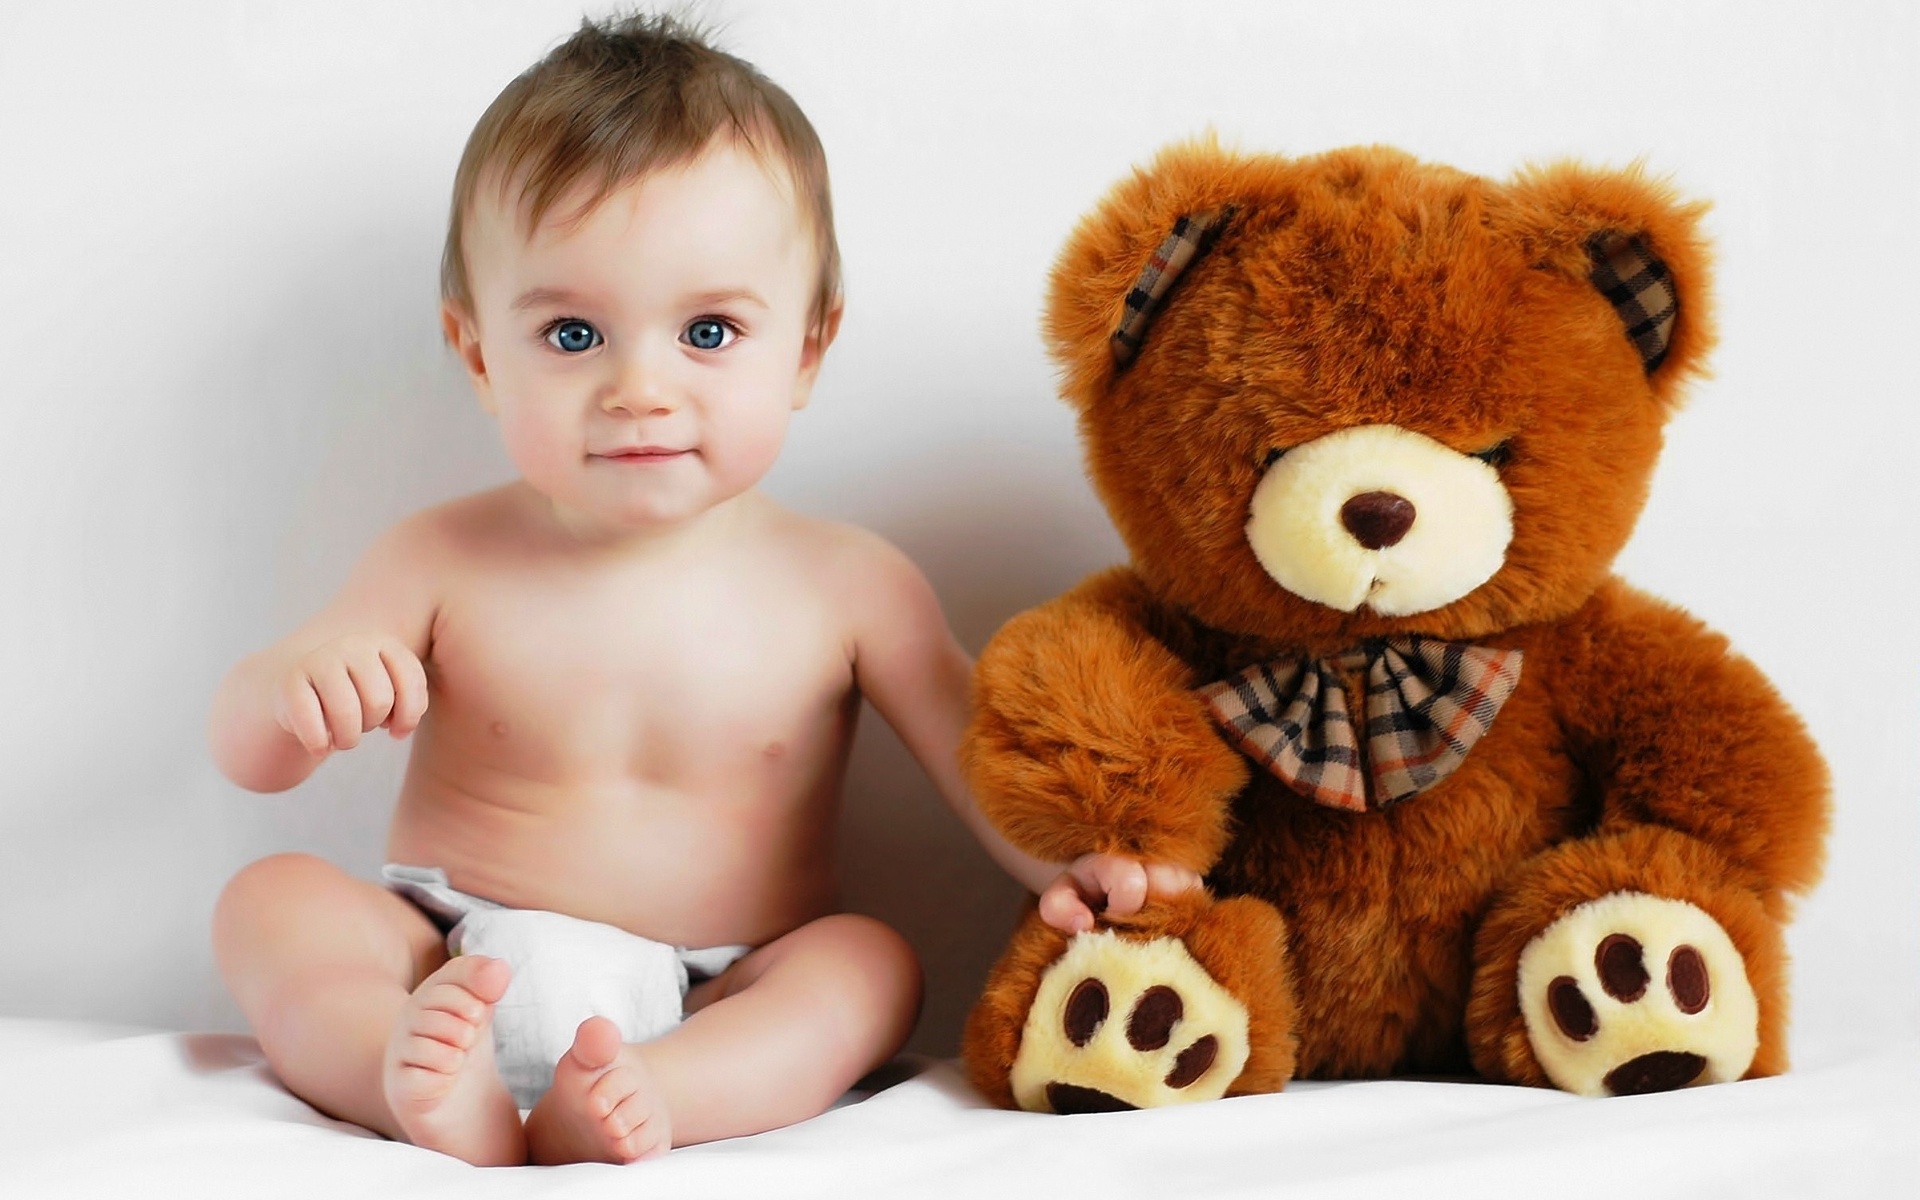 248105 Hintergrundbild herunterladen kind, fotografie, baby, bär, süß, teddybär - Bildschirmschoner und Bilder kostenlos